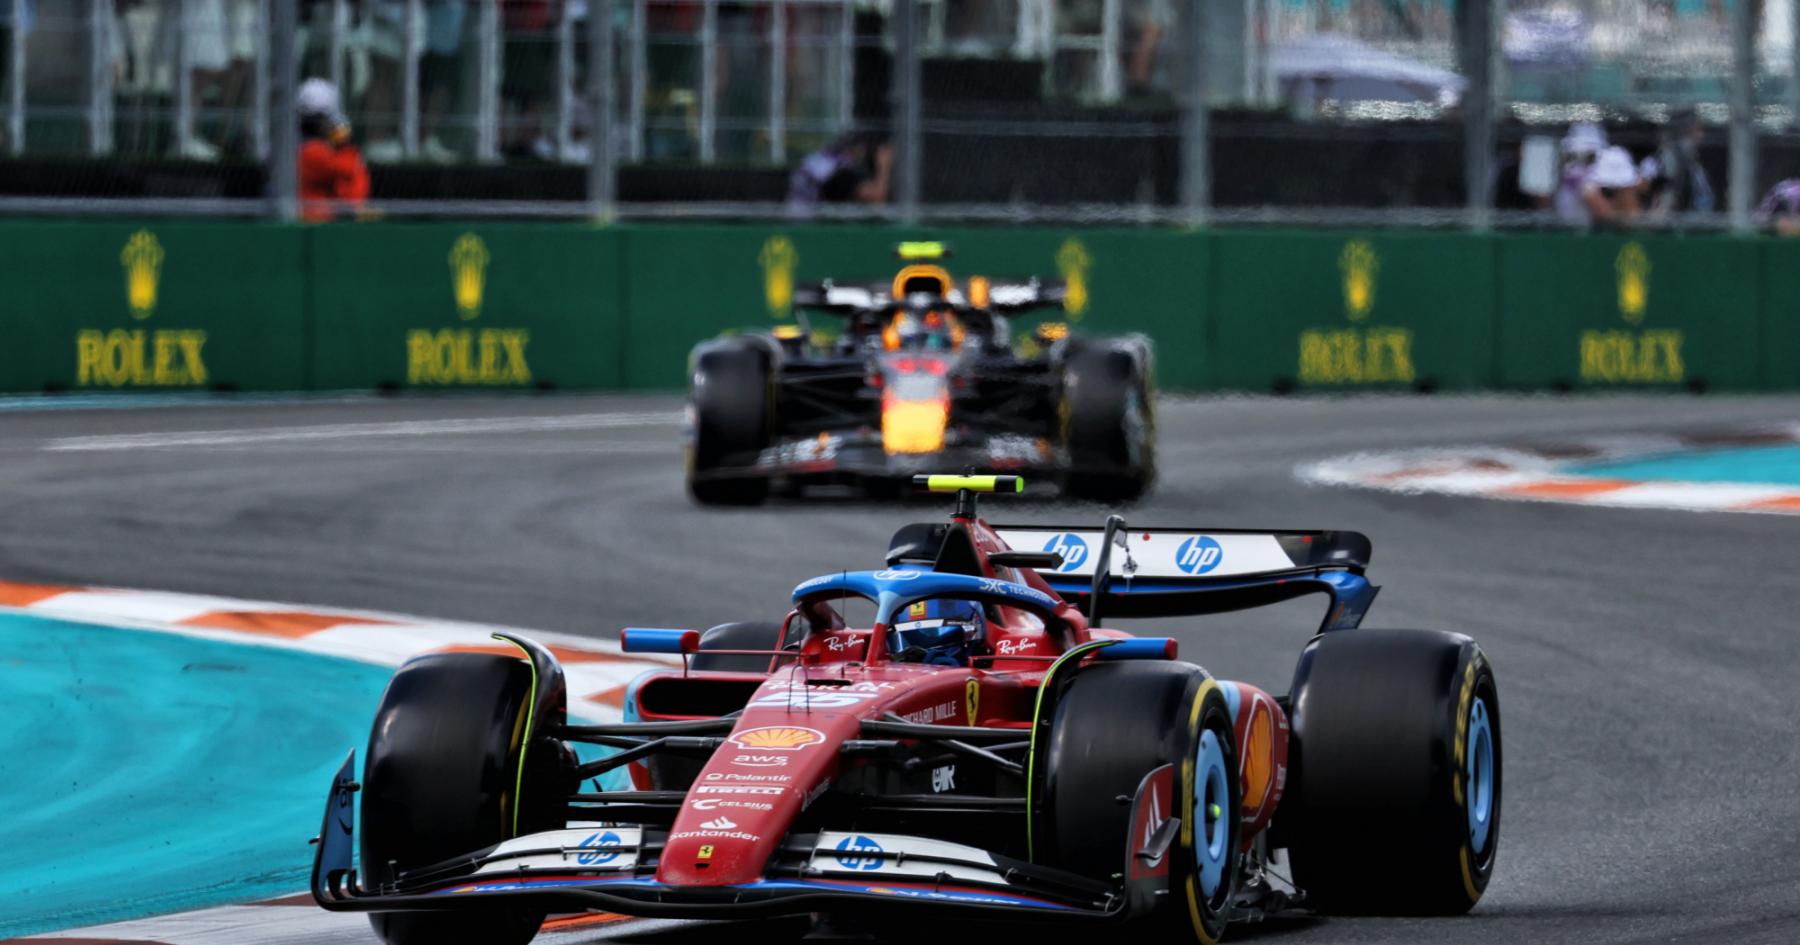 Revving Ahead: Ferrari's Game-Changing Deal Shakes Up Sponsorship Rankings